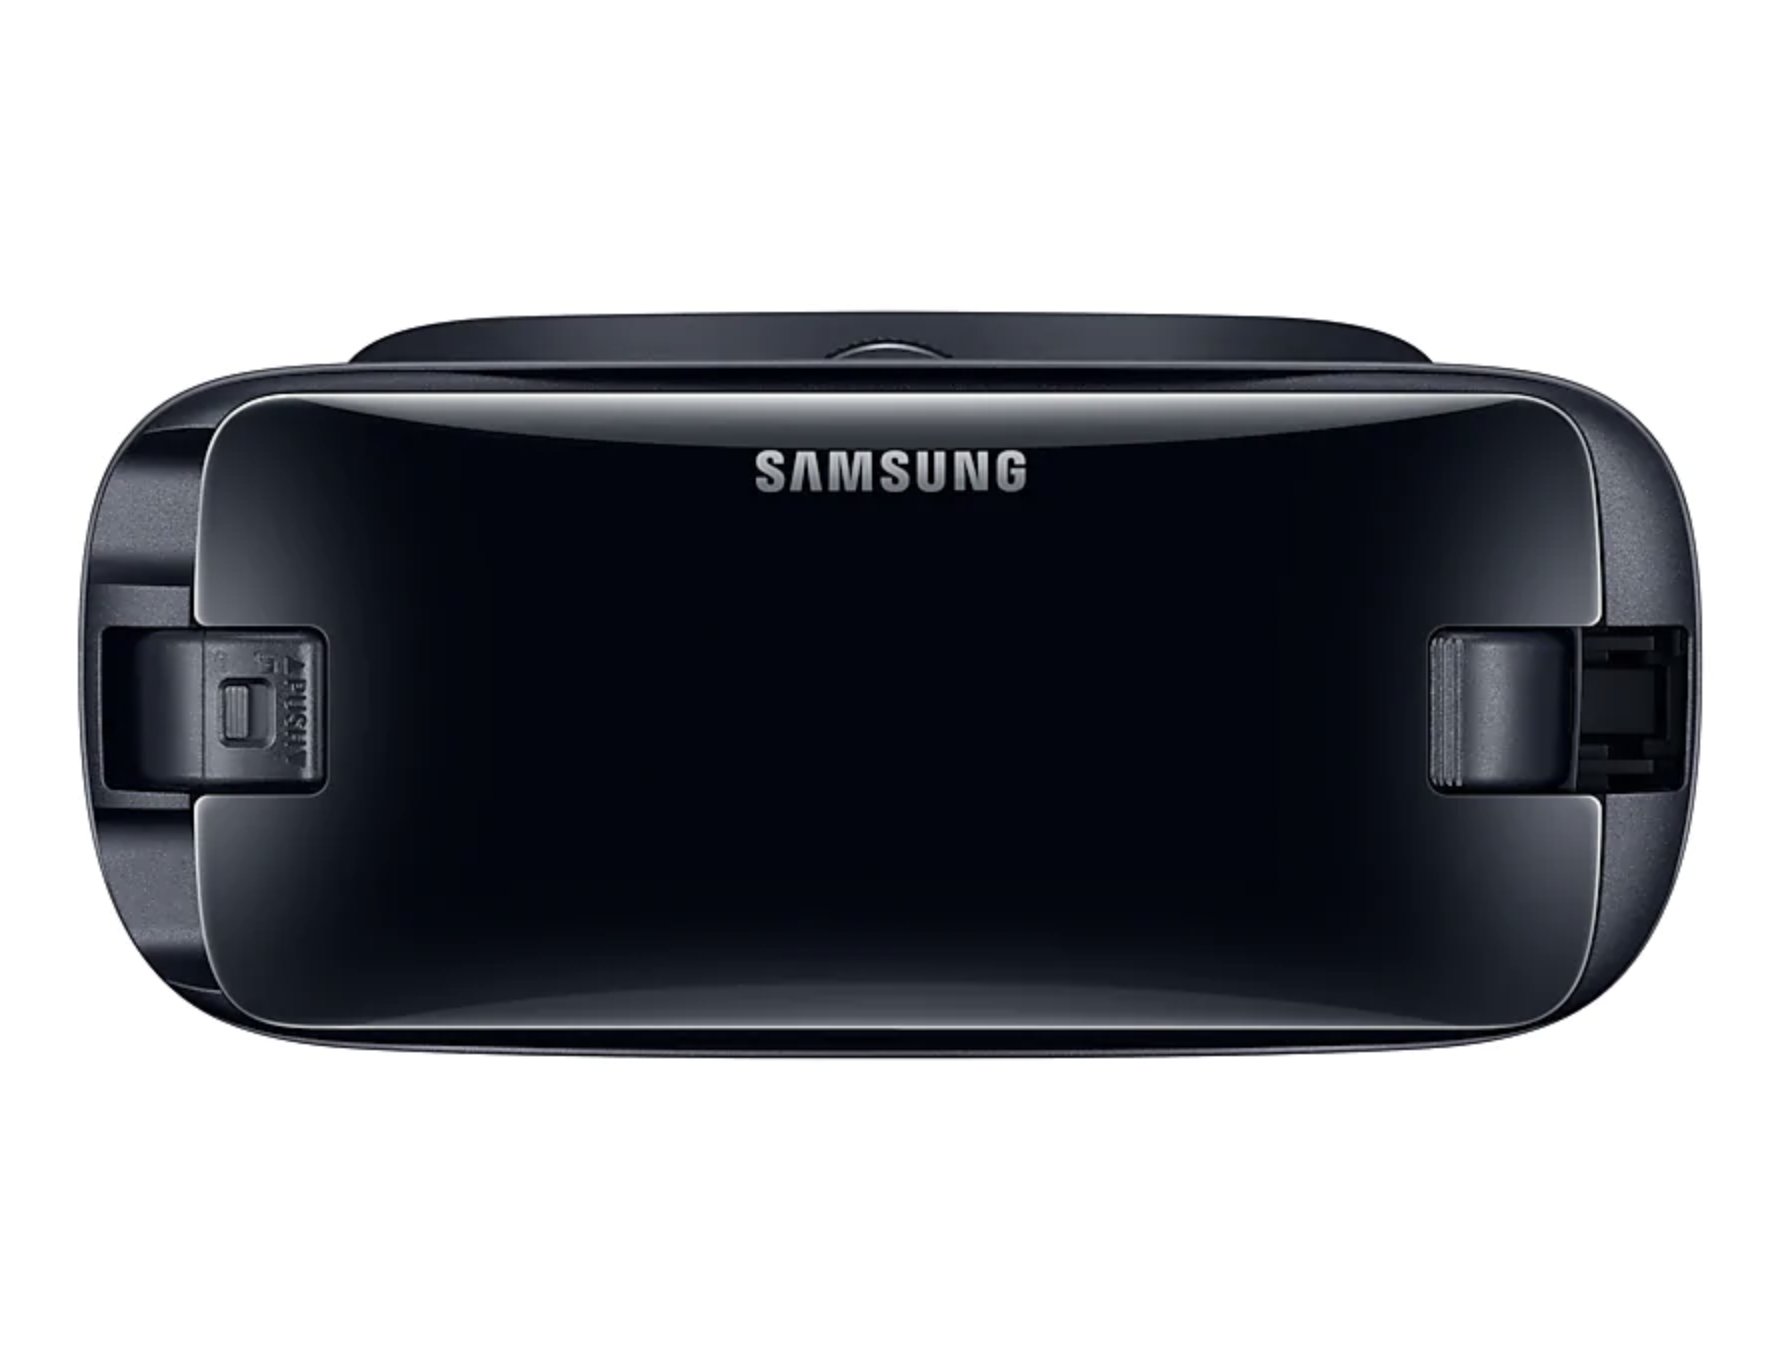 Realmore | Samsung Gear VR